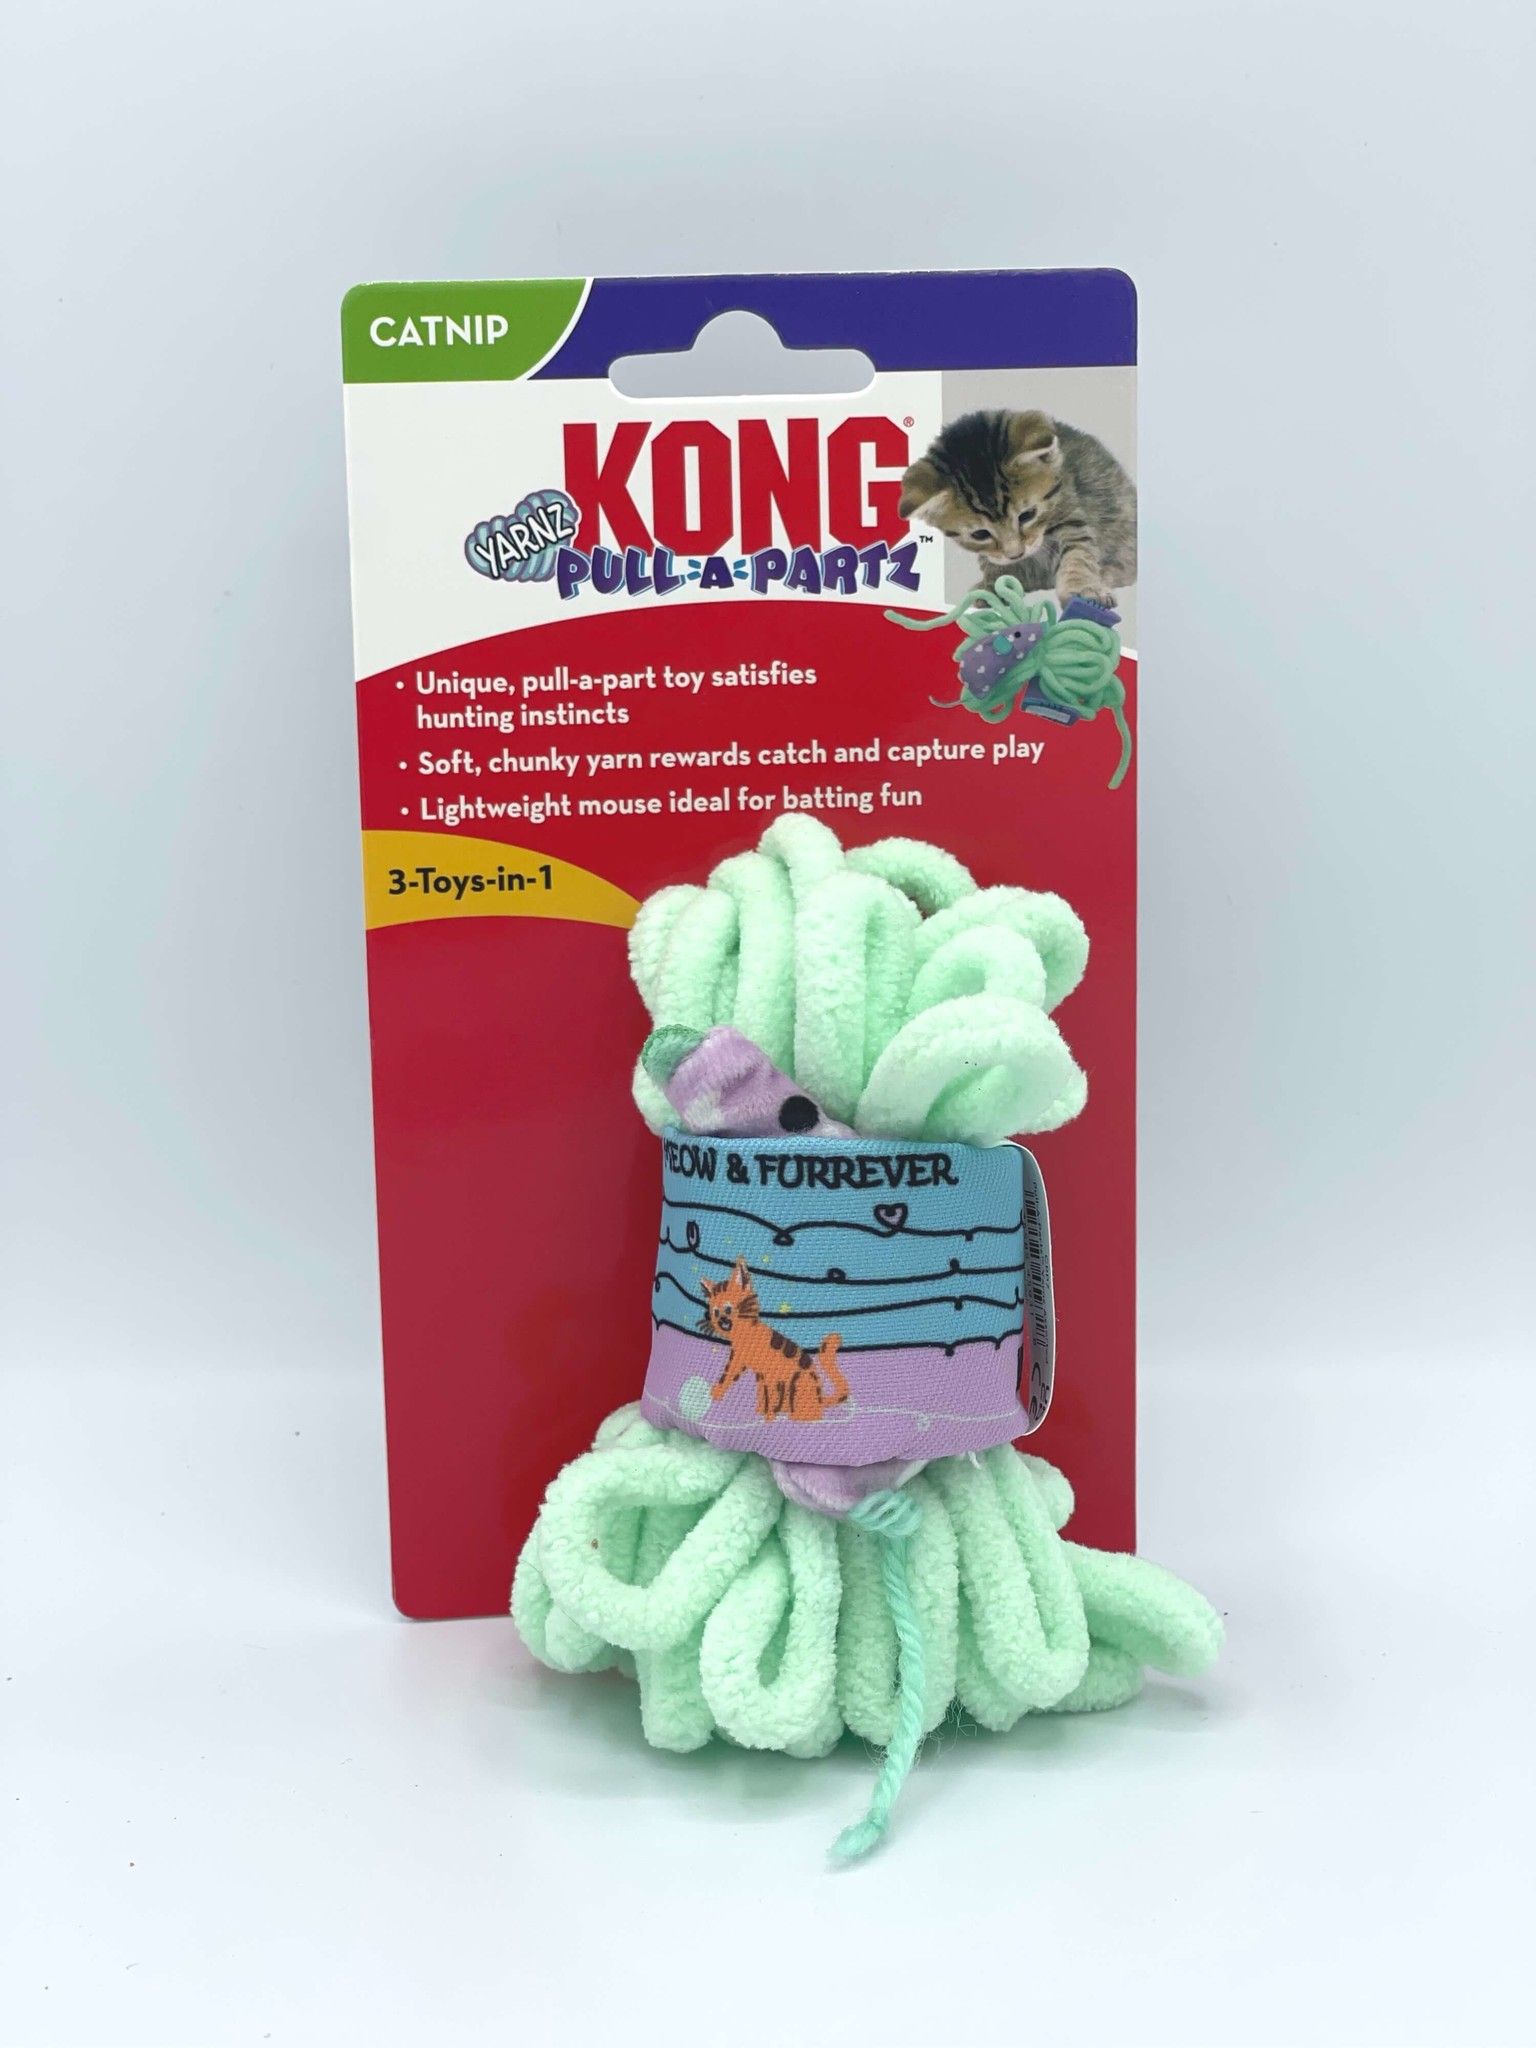 Kongsicles for dogs & some kitty Kong fun